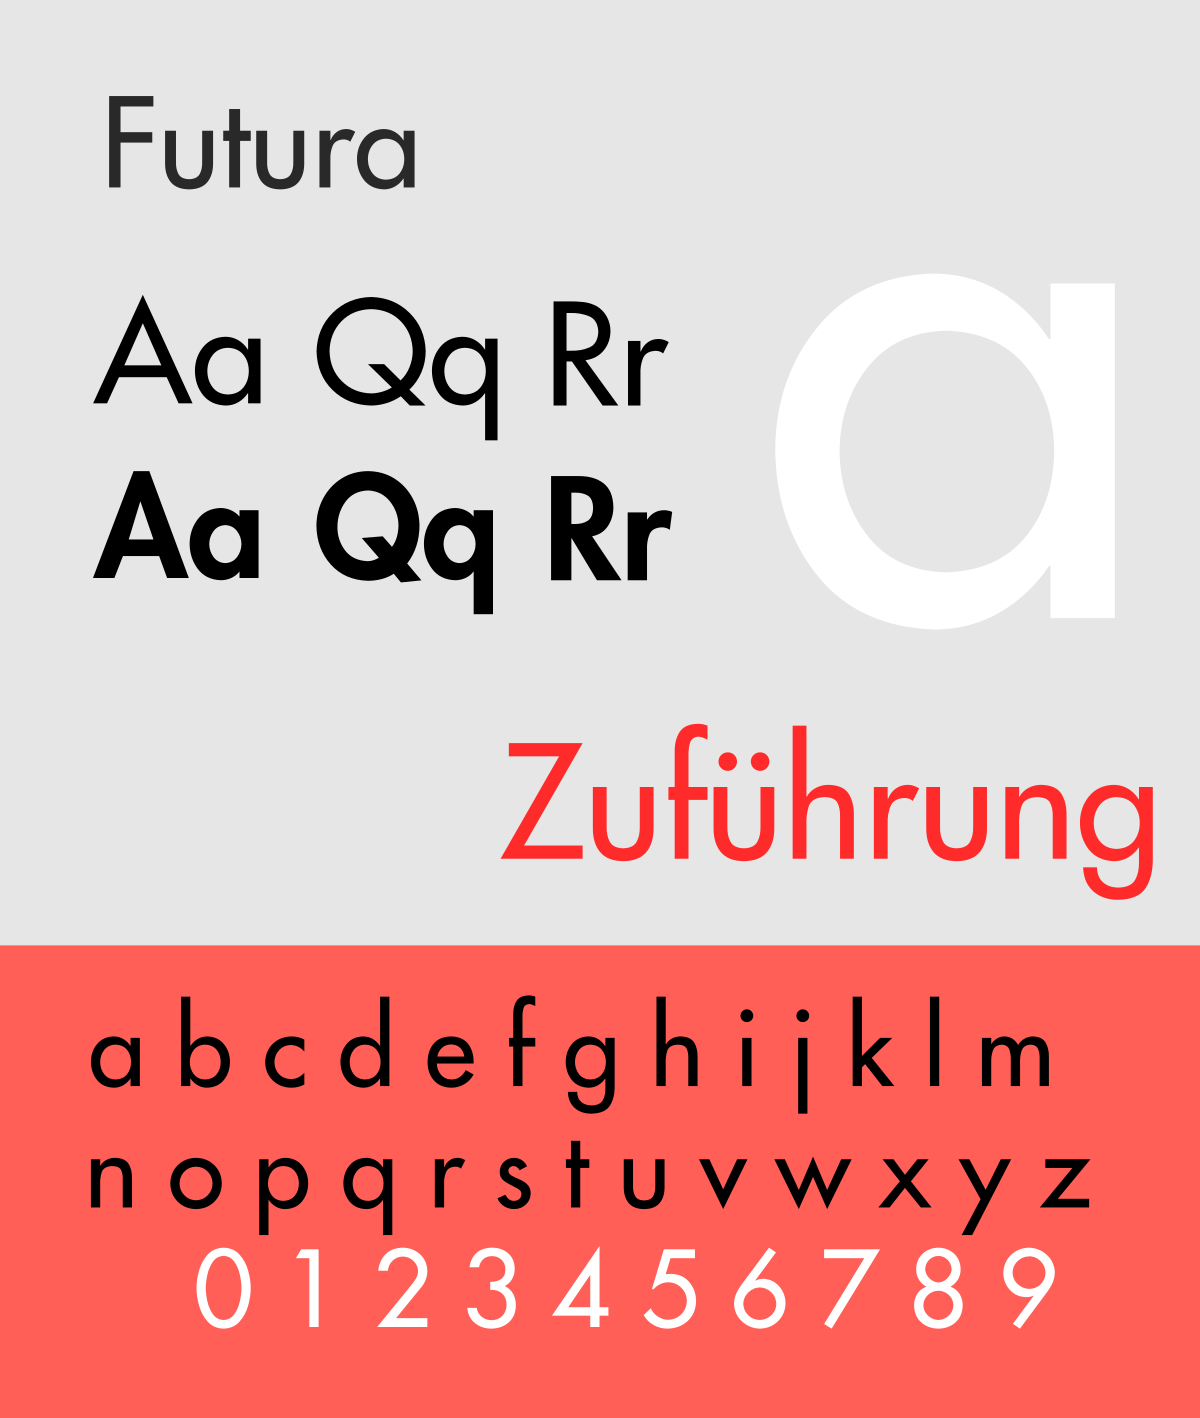 Futura Typeface Wikipedia